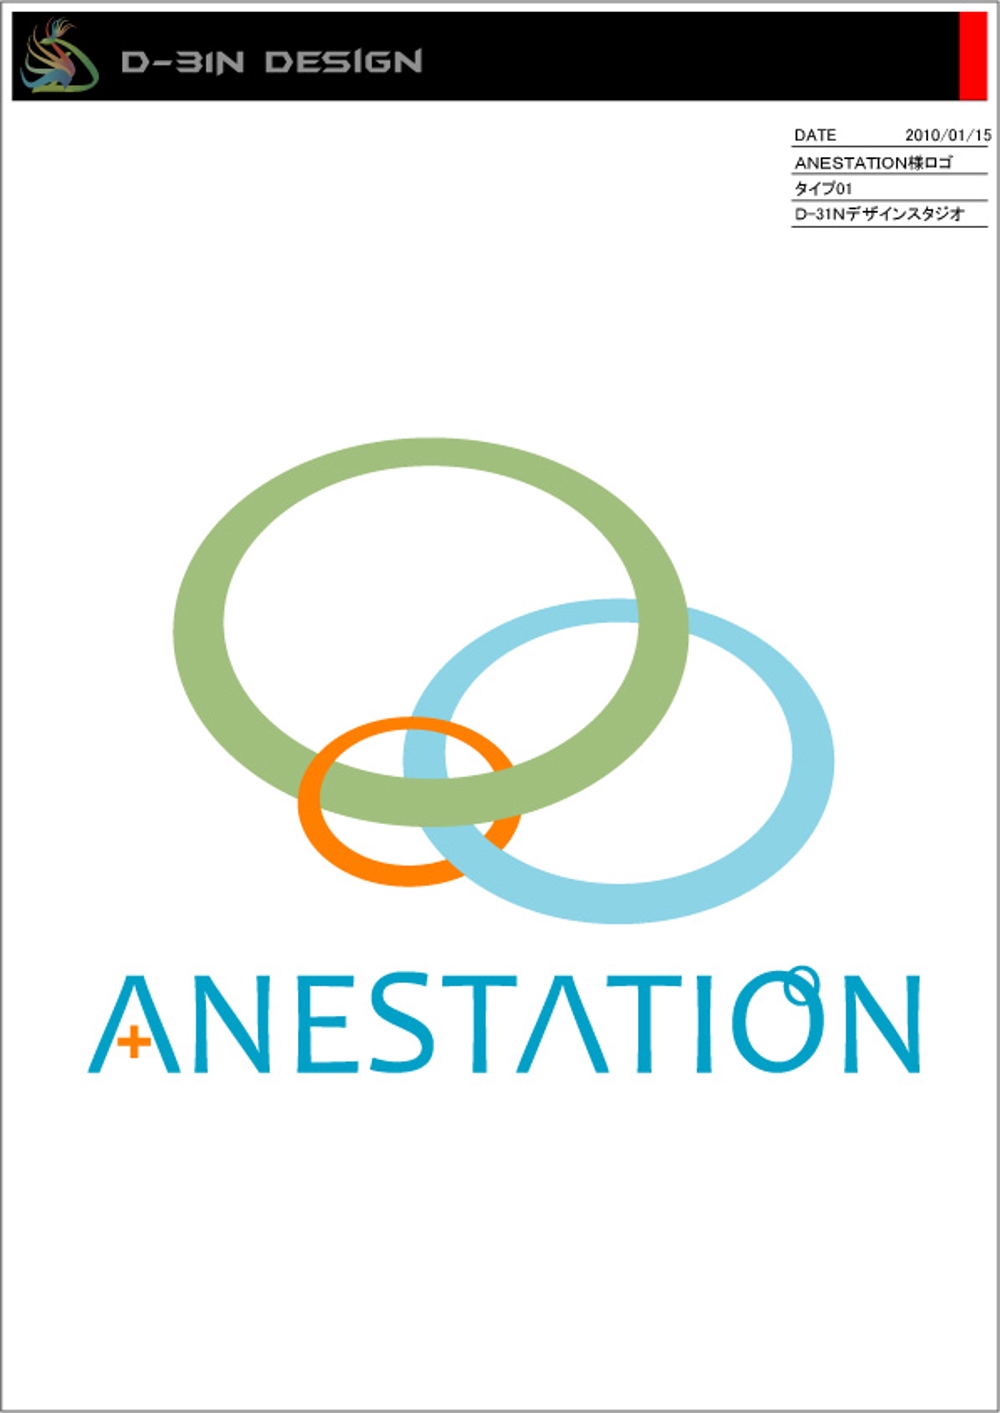 anestation-logo01.jpg